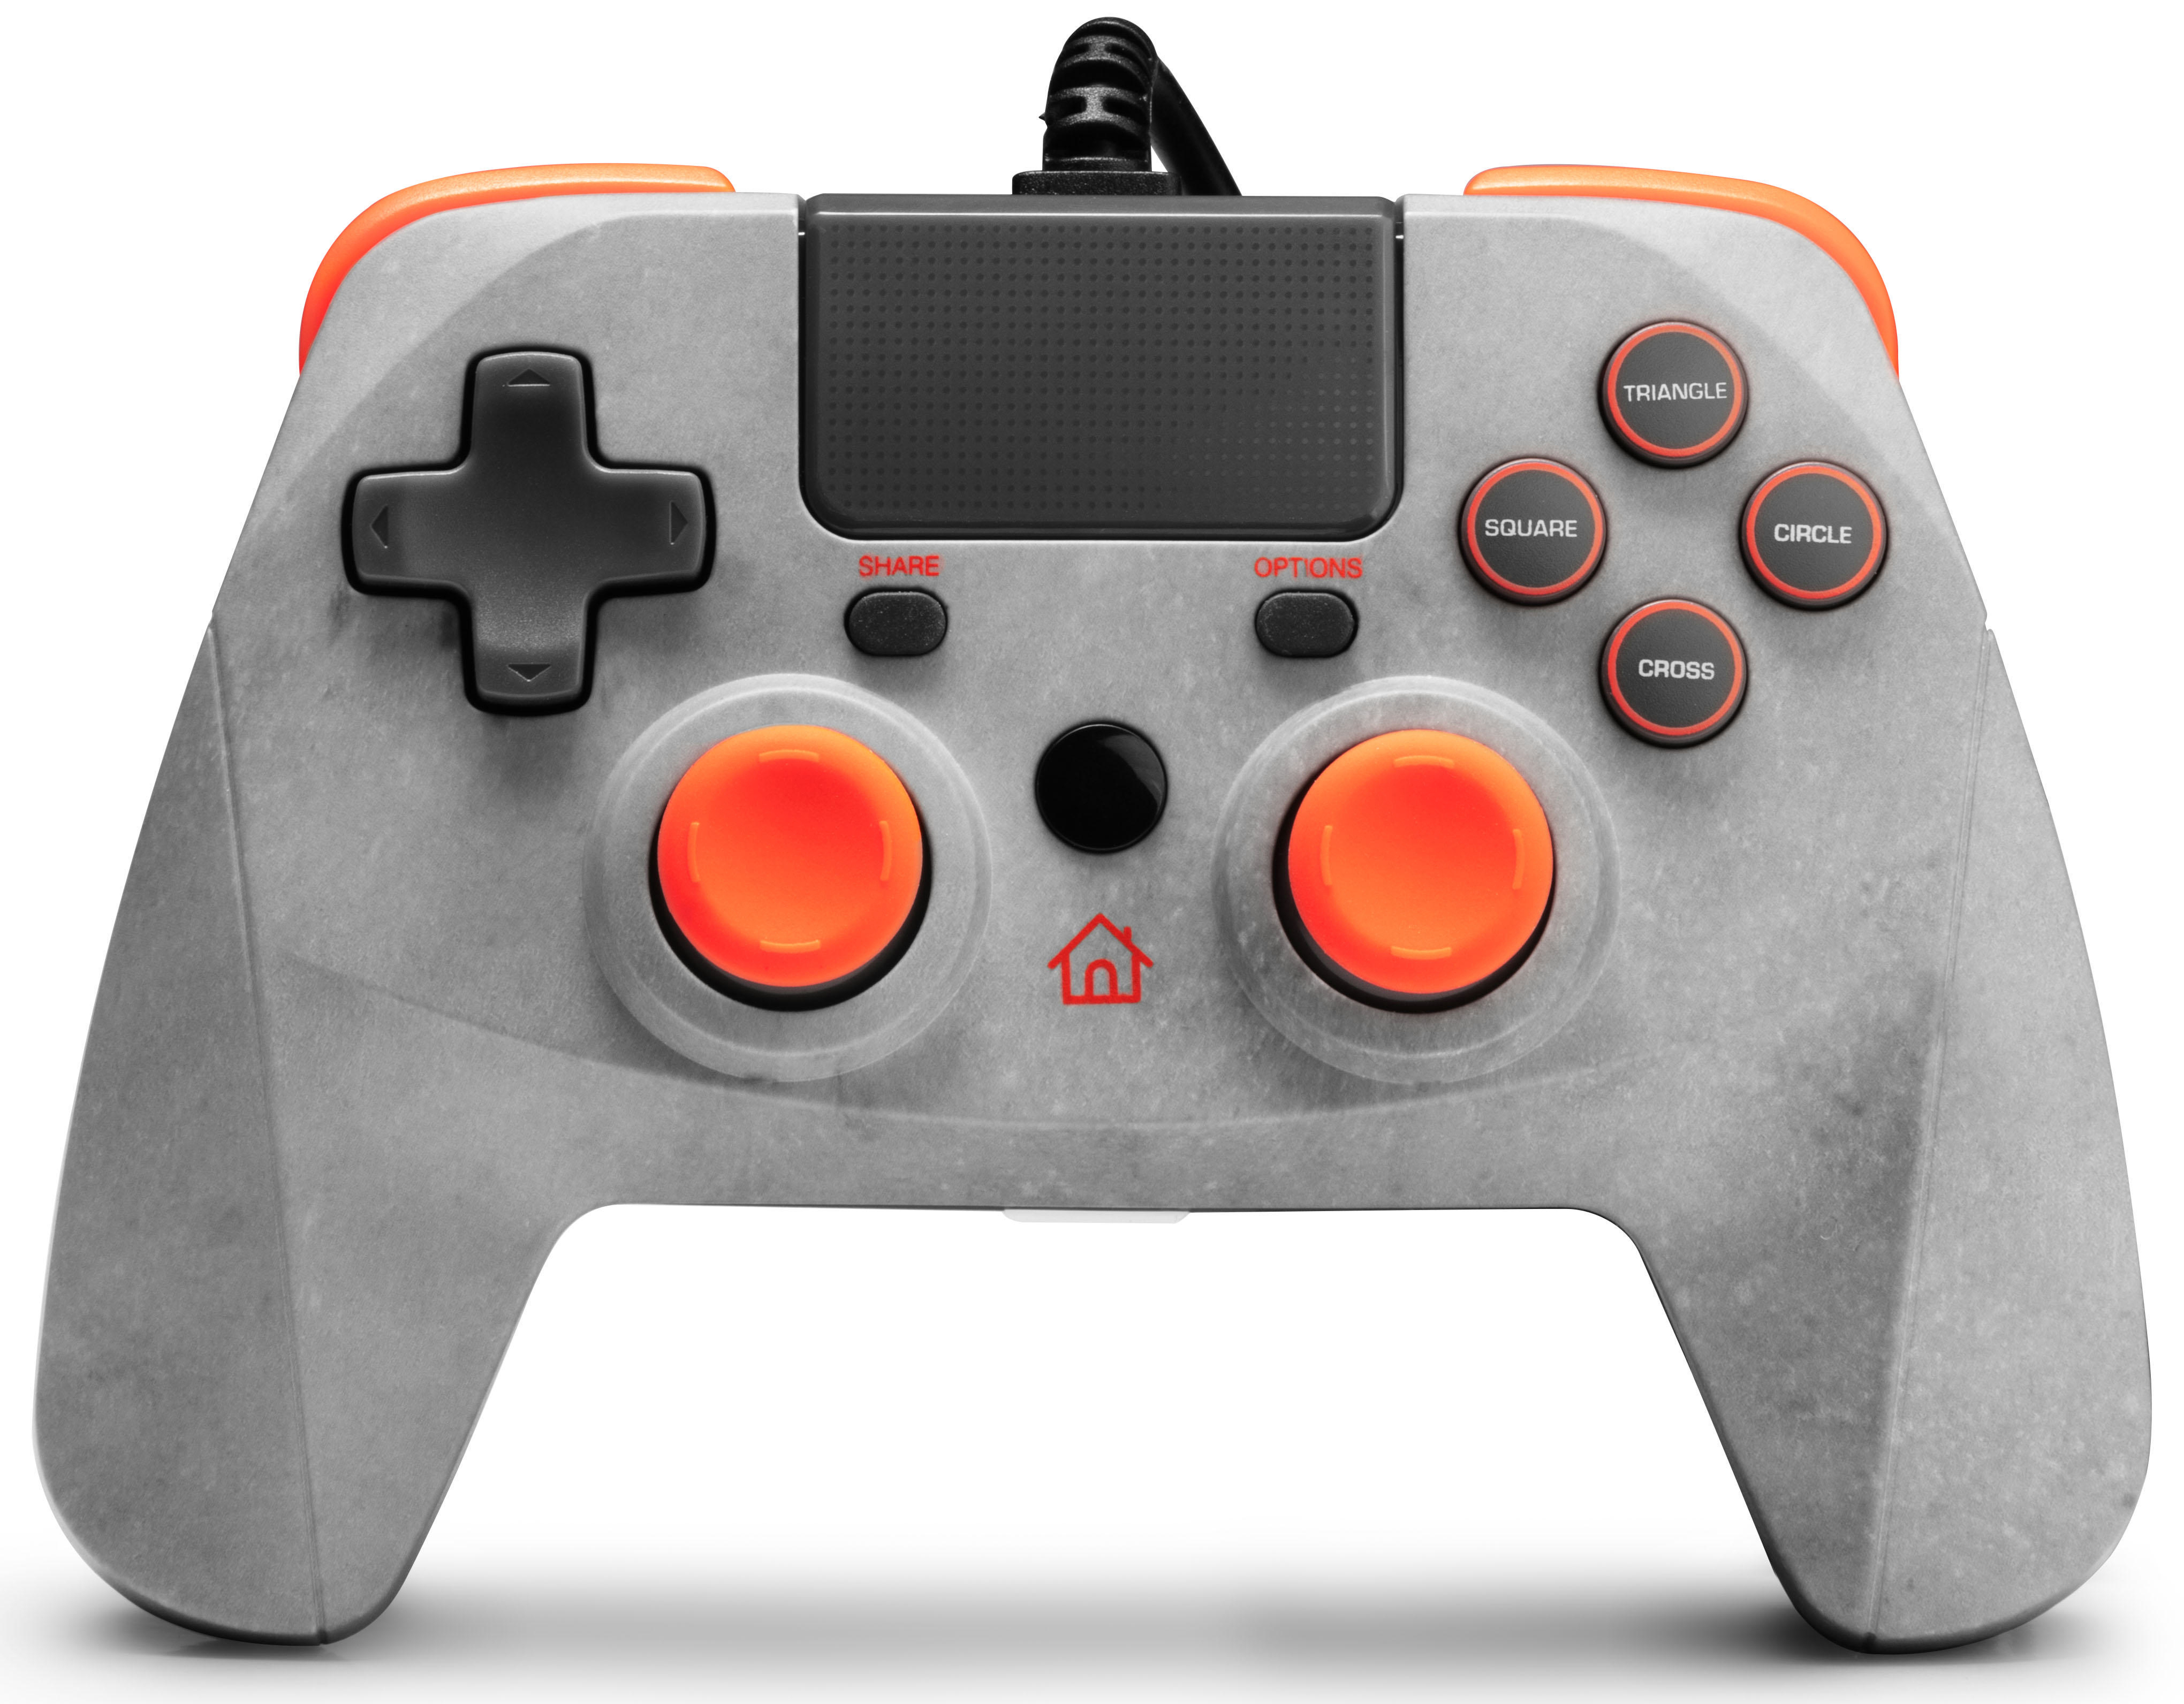 Game:Pad ROCK 4 SNAKEBYTE Grau/Orange 4 für S PlayStation Controller